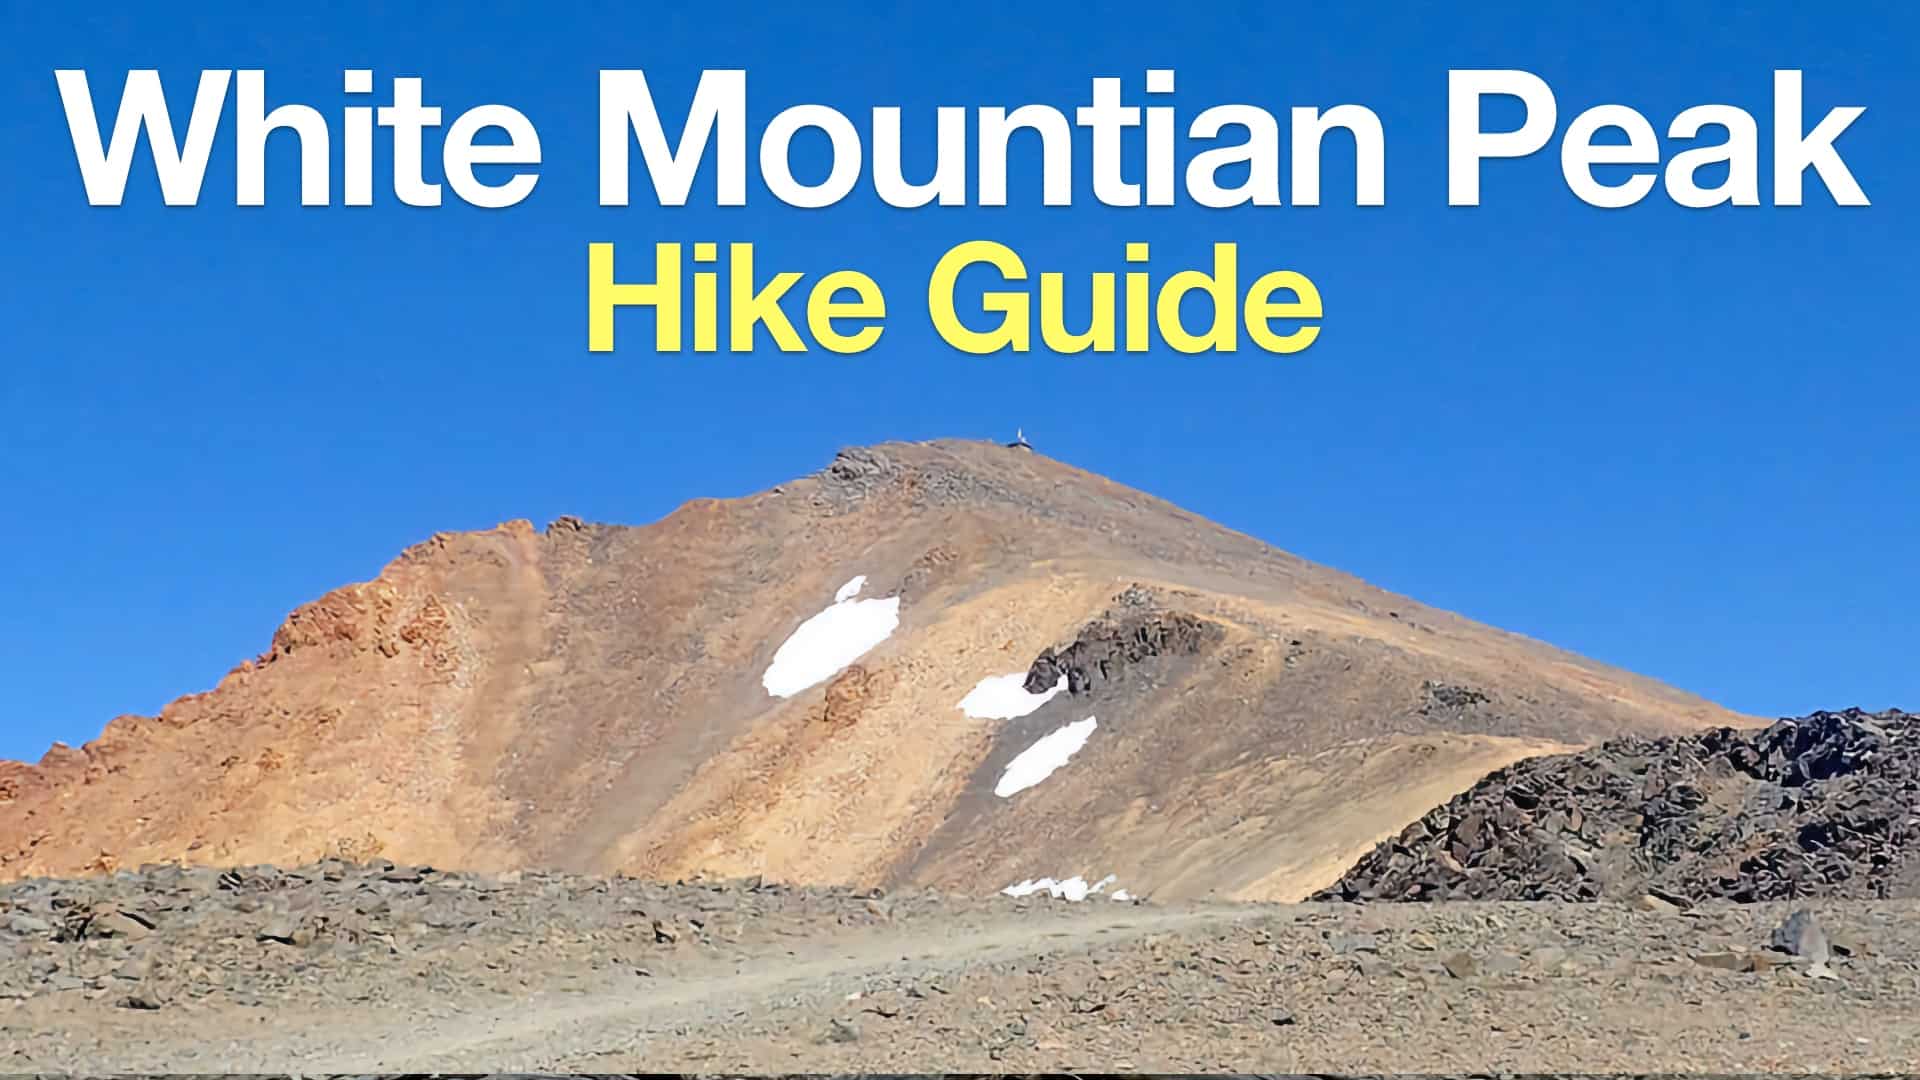 https://hikingguy.com/wp-content/uploads/white-mountain-peak-poster.jpg